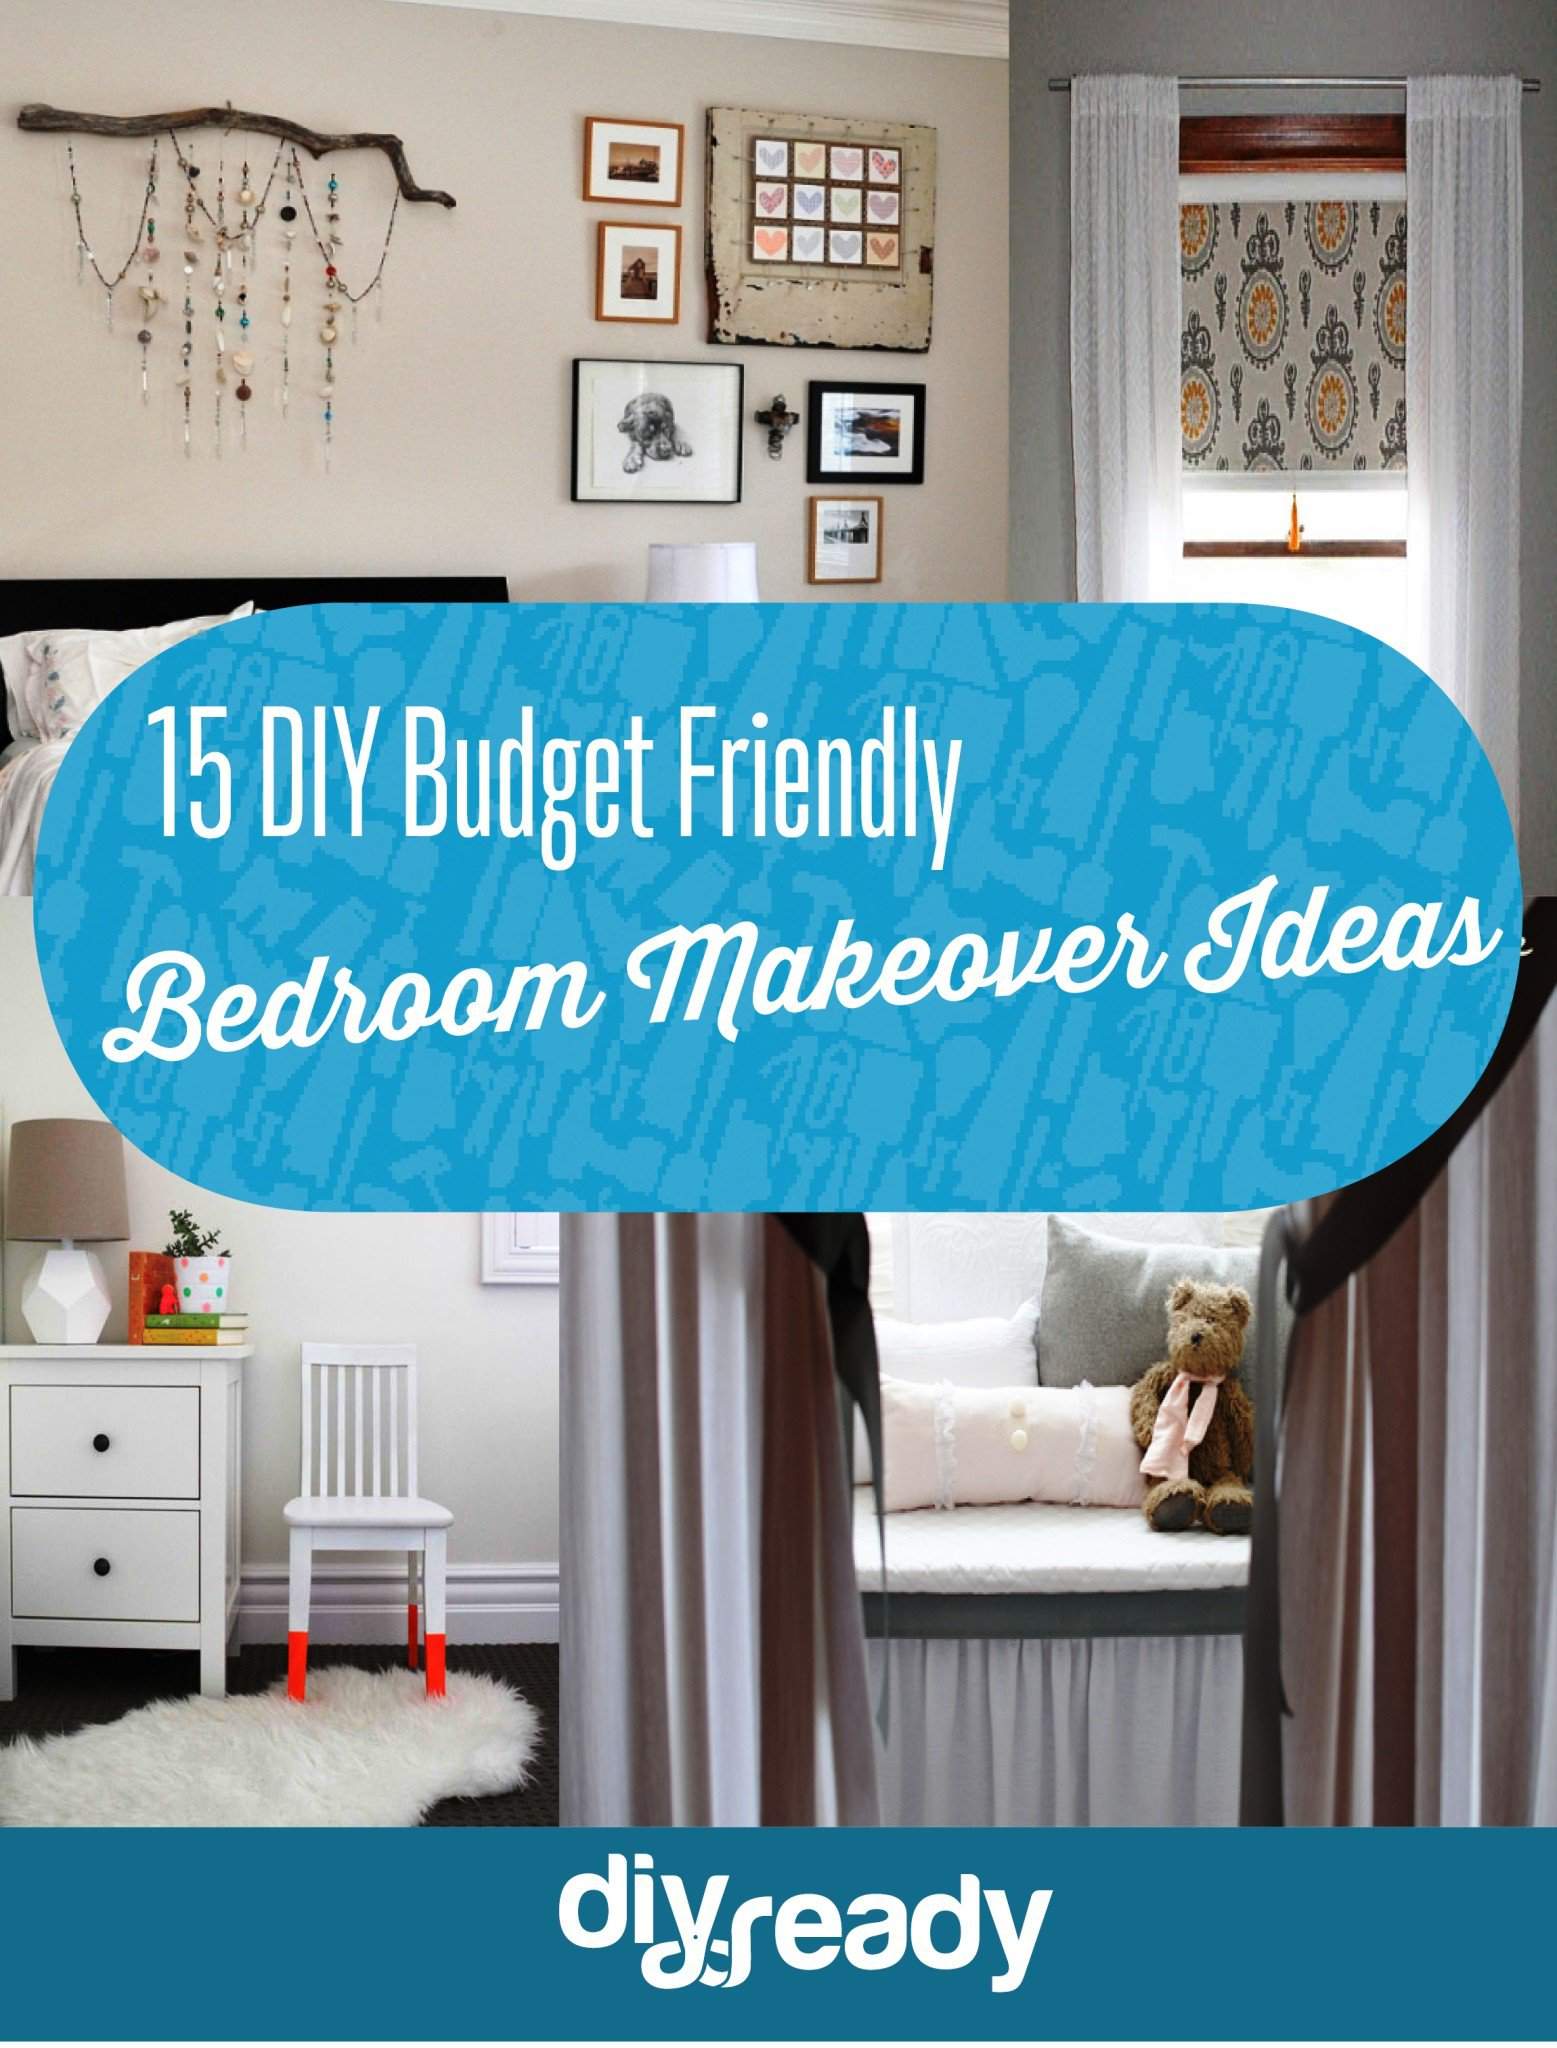 15 DIY Budget Friendly Bedroom Makeover Ideas